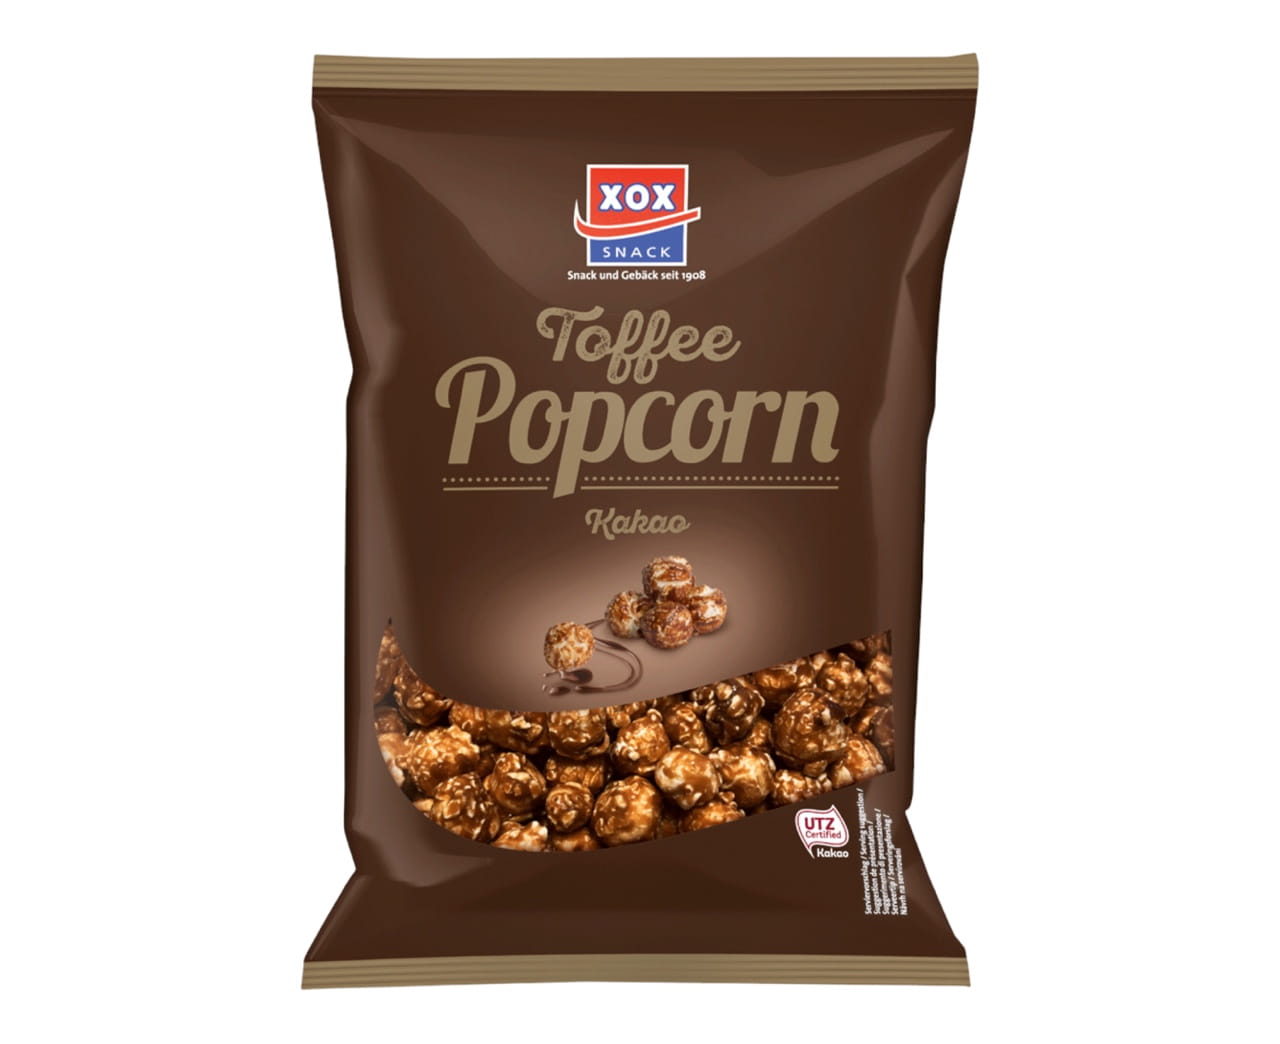 Rif_483 XOX Popcorn Toffee mix – caramello e cacao